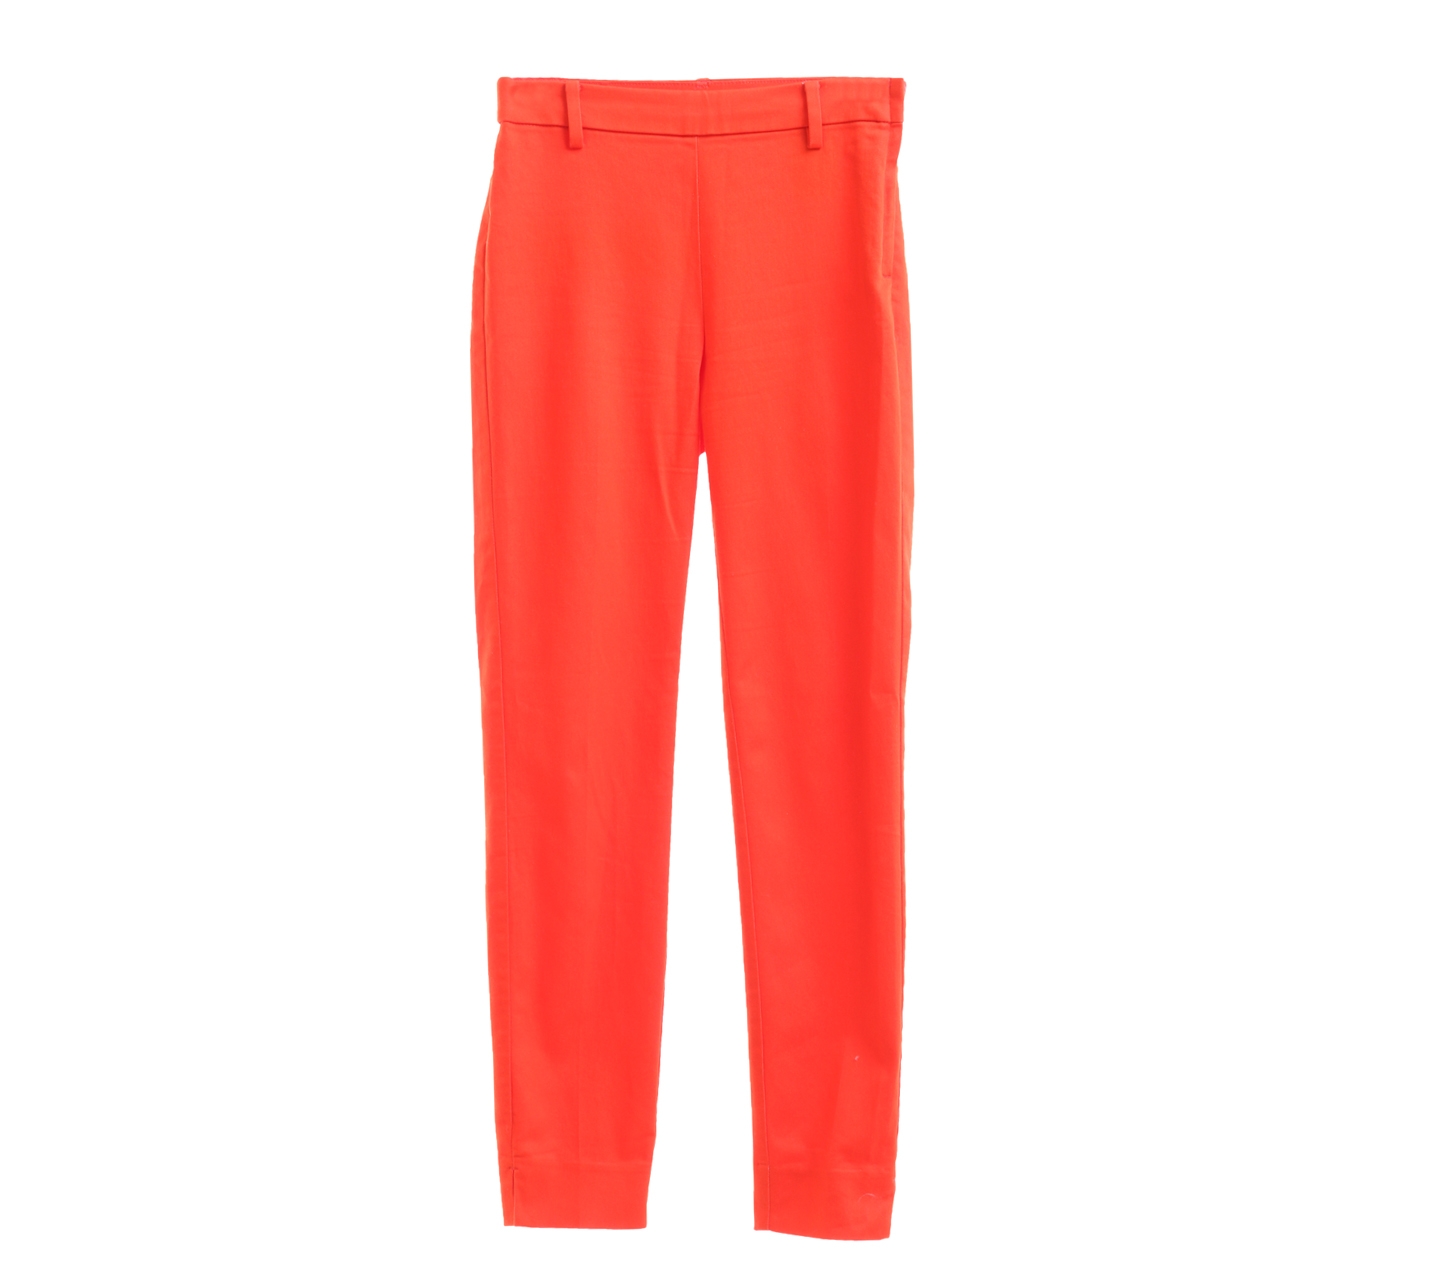 H&M Orange Skinny Long Pants	